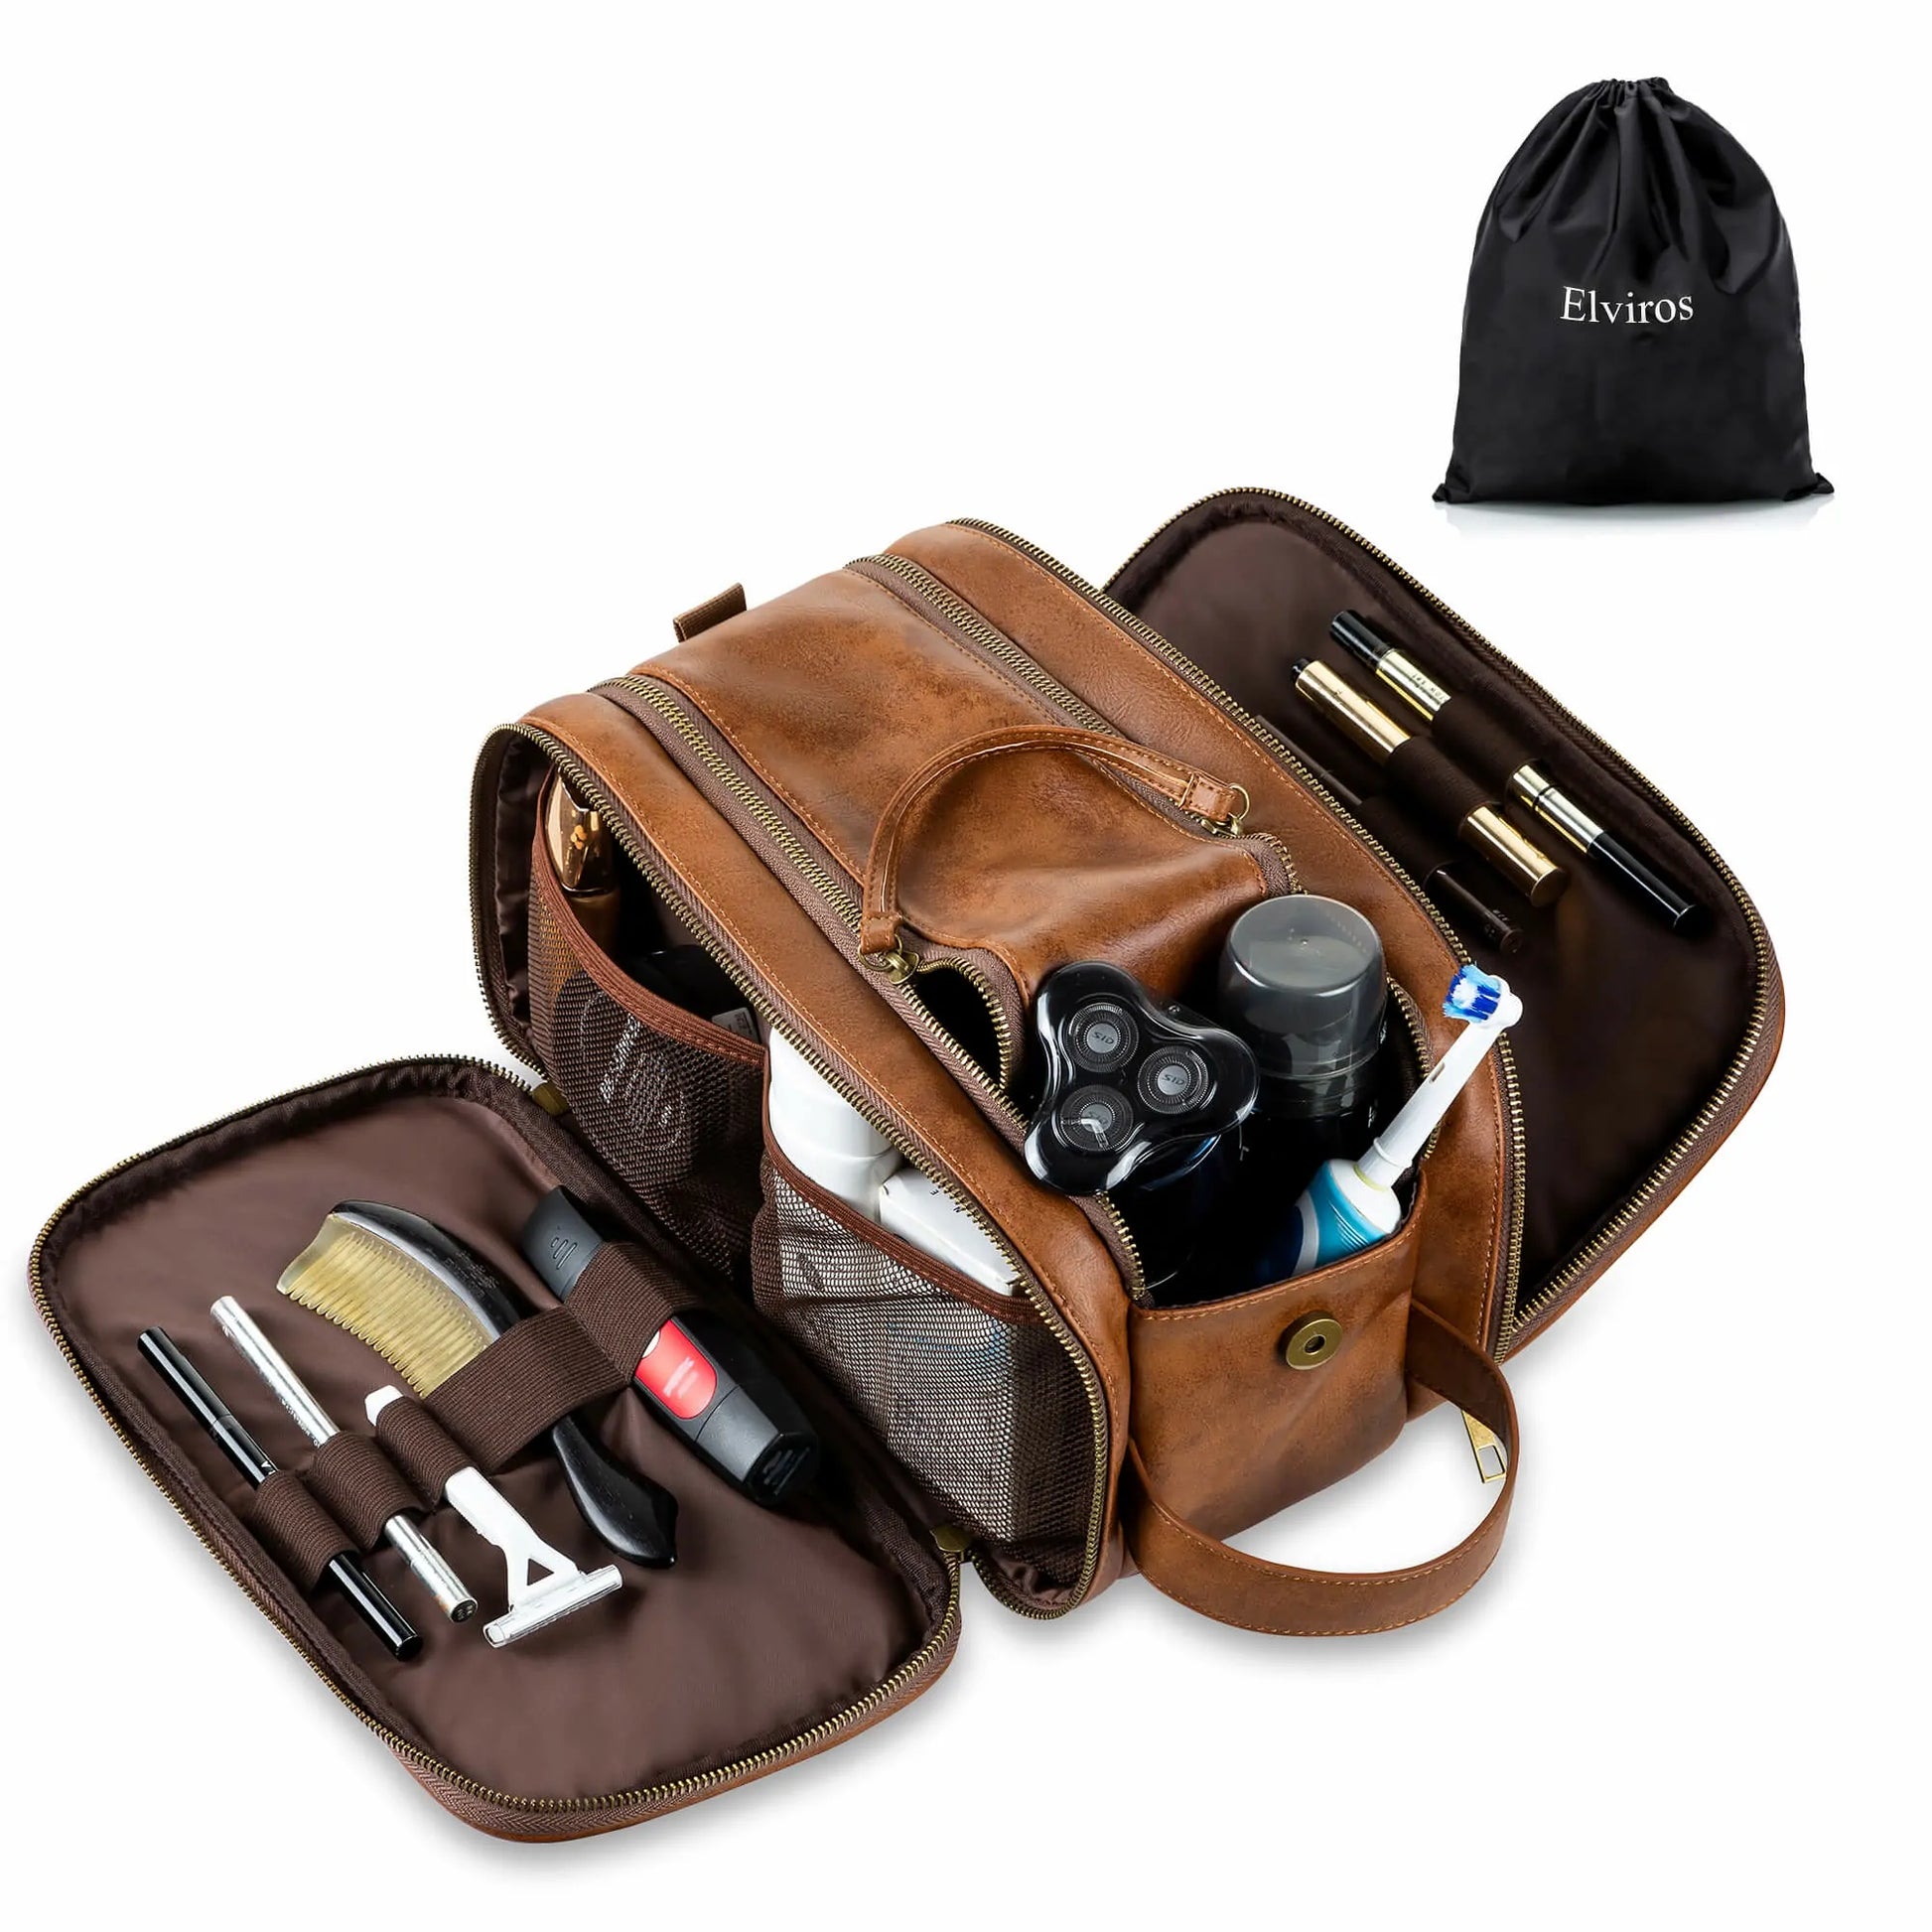 Elviros Toiletry Bag, Travel Dopp Kit Leather Makeup Organizer